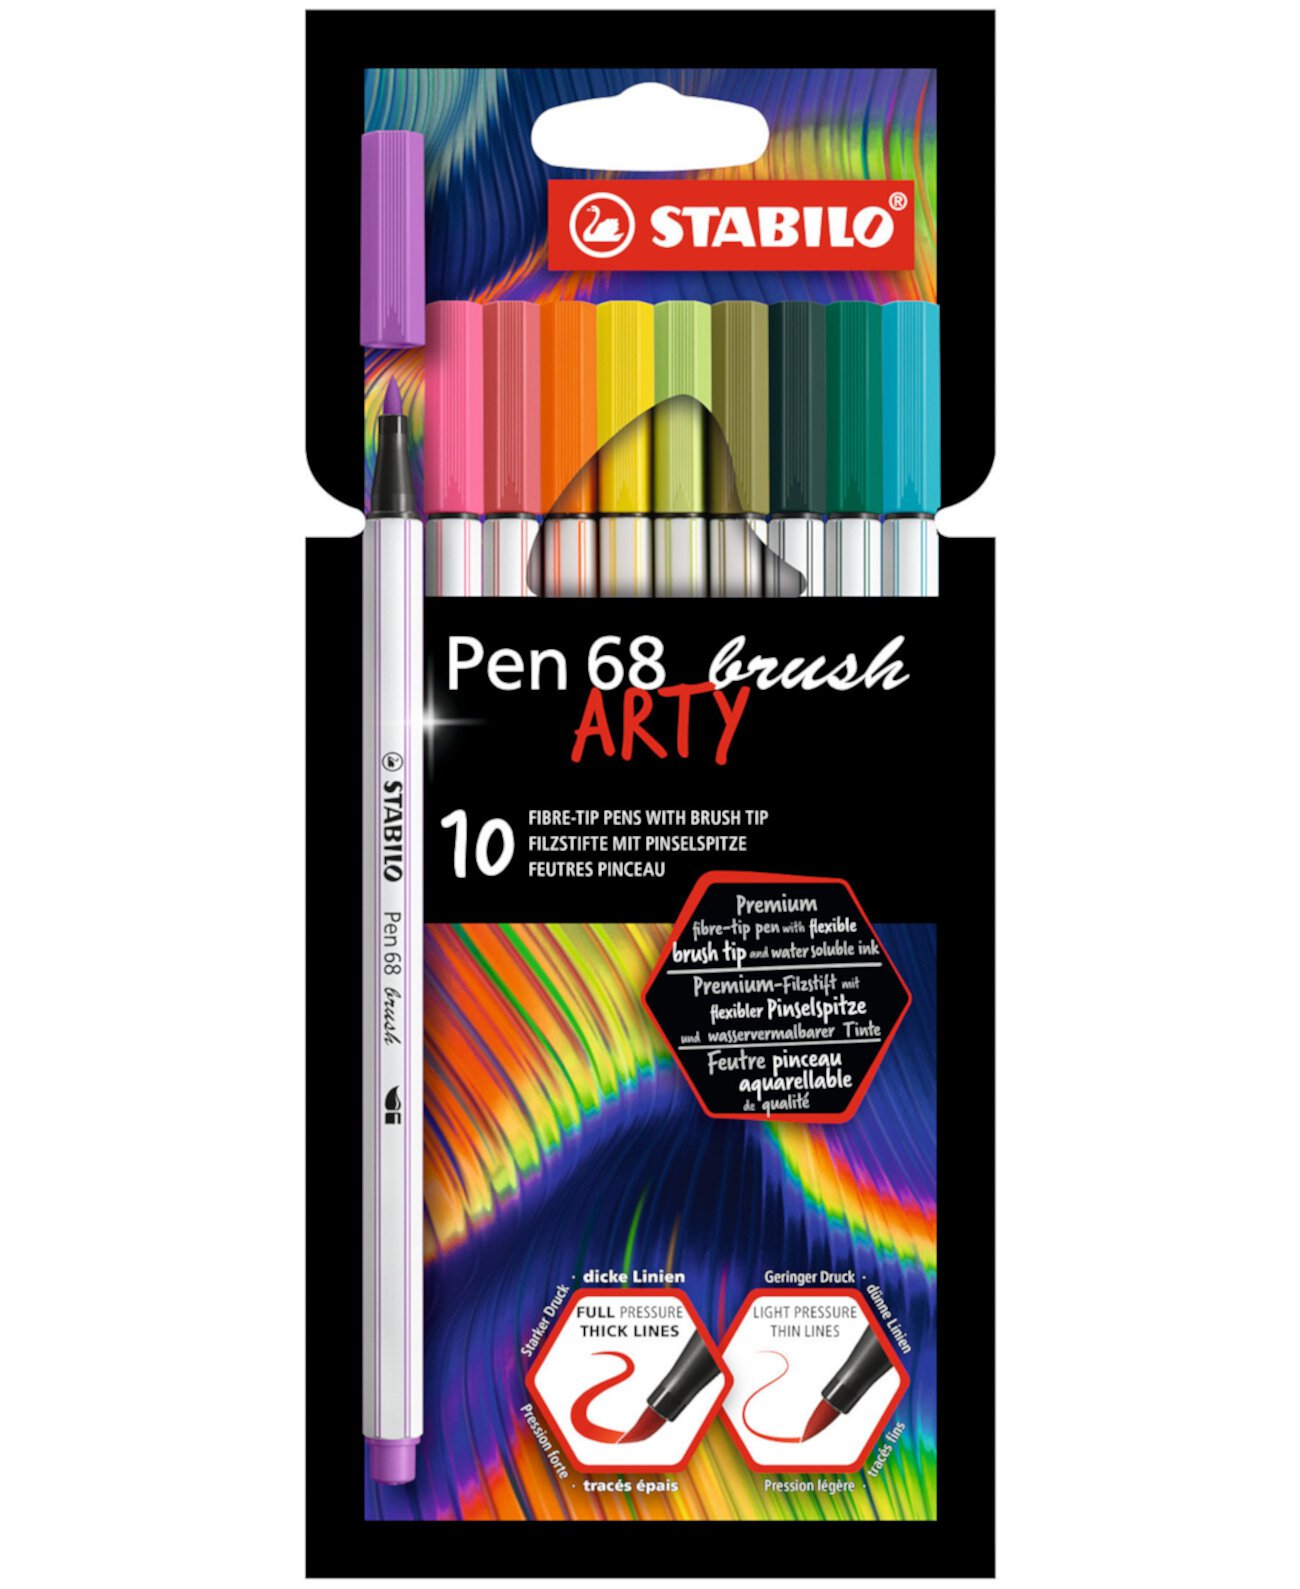 Набор кистей Pen 68 Arty, 10 предметов Stabilo